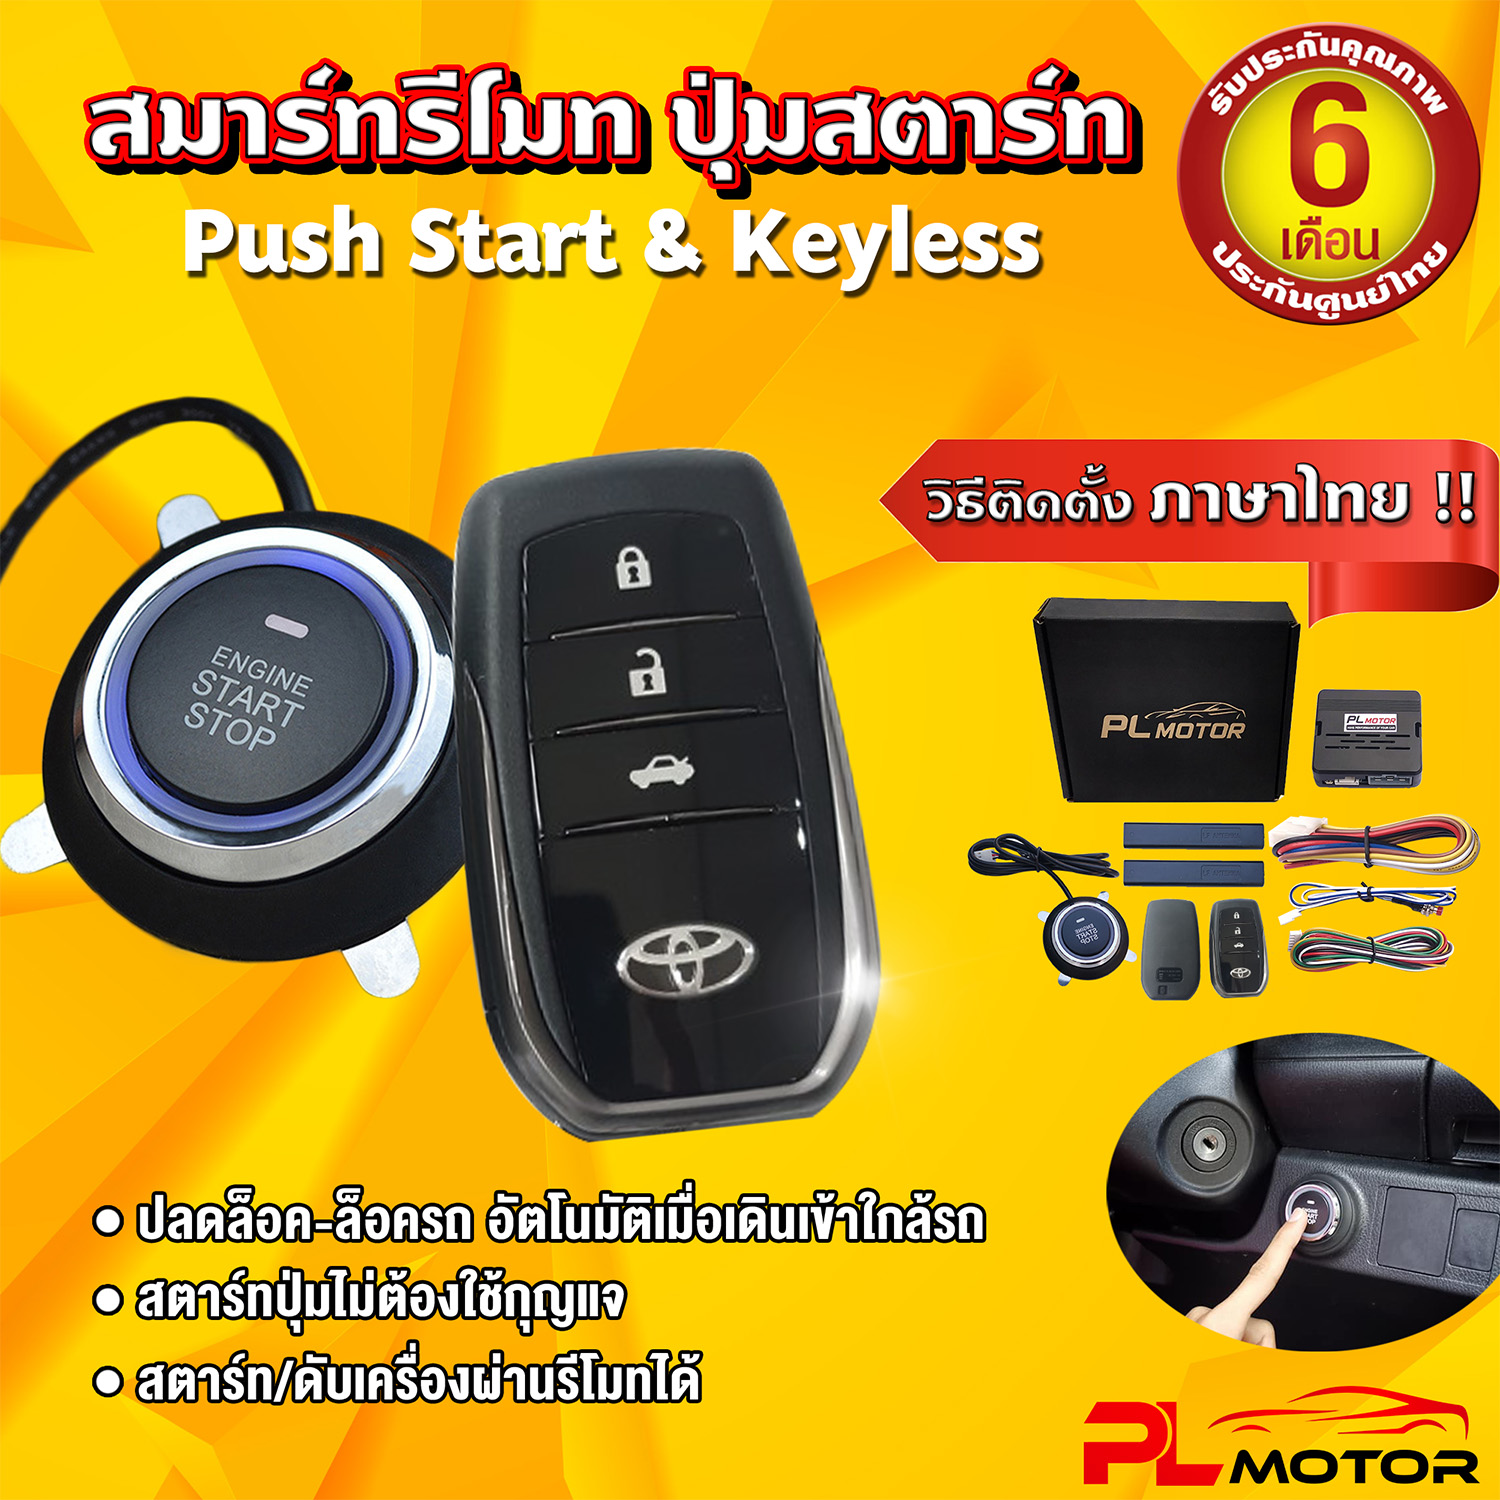 PL Motor ปุ่มสตาสรถยนต์ ปุ่มกดสตาร์ทรถ Keyless & Push Start เปิดรถอัตโนมัติ - รีโมทโตโยต้า (ประกันศูนย์ 6 เดือน คู่มือภาษาไทย) สำหรับ TOYOTA HONDA ISUZU NISSAN MITSU